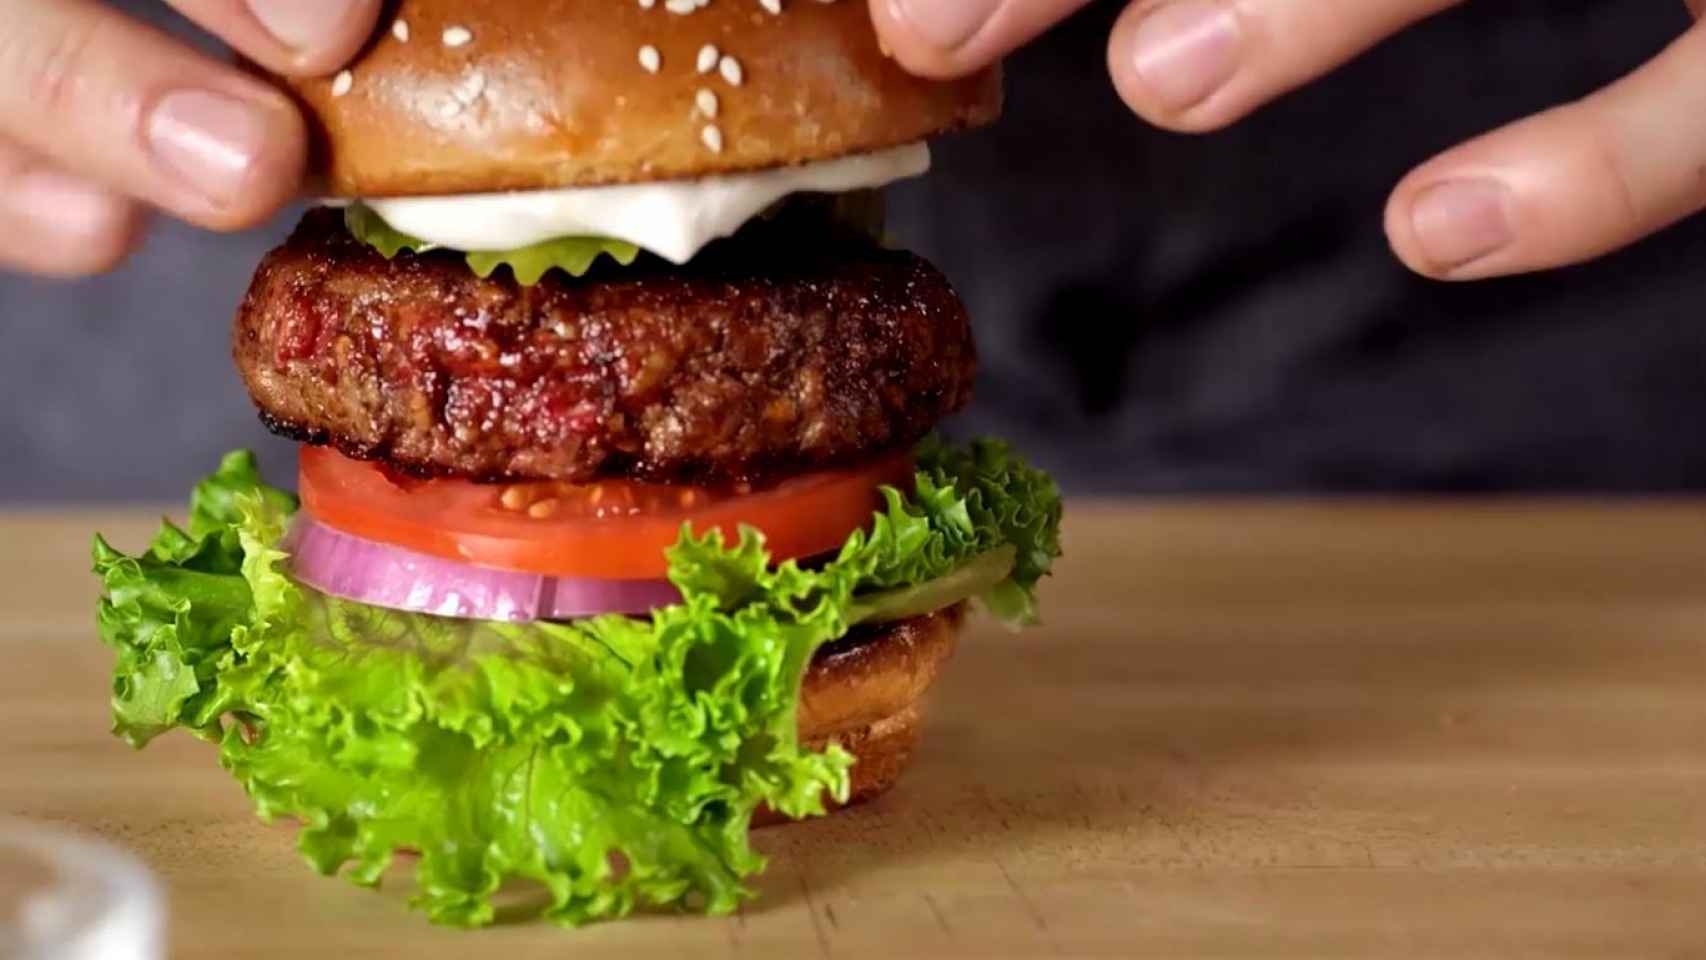 La OCU ha analizado las calidades de la carne de hamburguesa envasada.